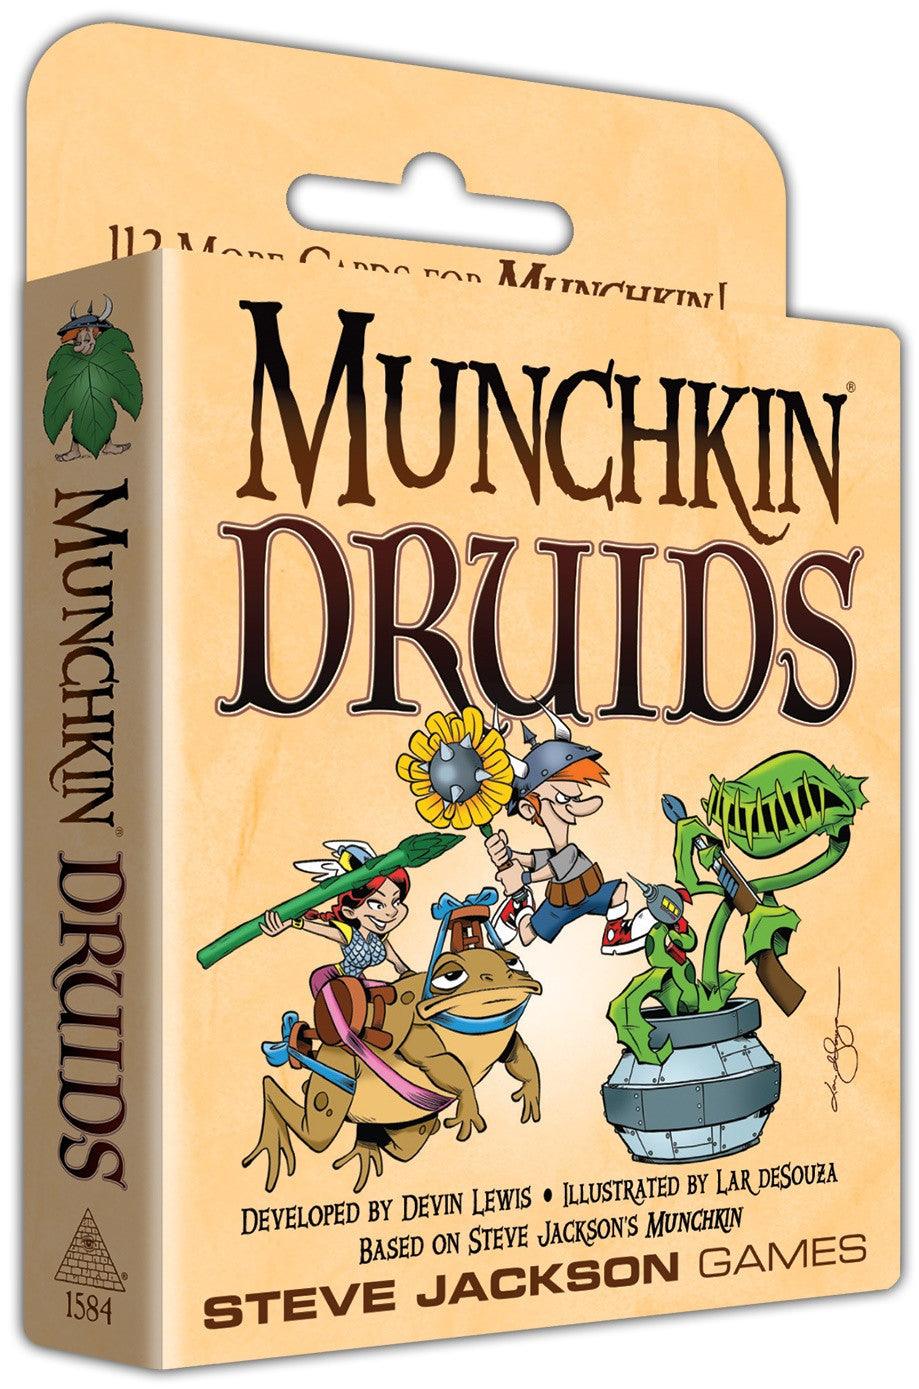 VR-103526 Munchkin Druids - Steve Jackson Games - Titan Pop Culture